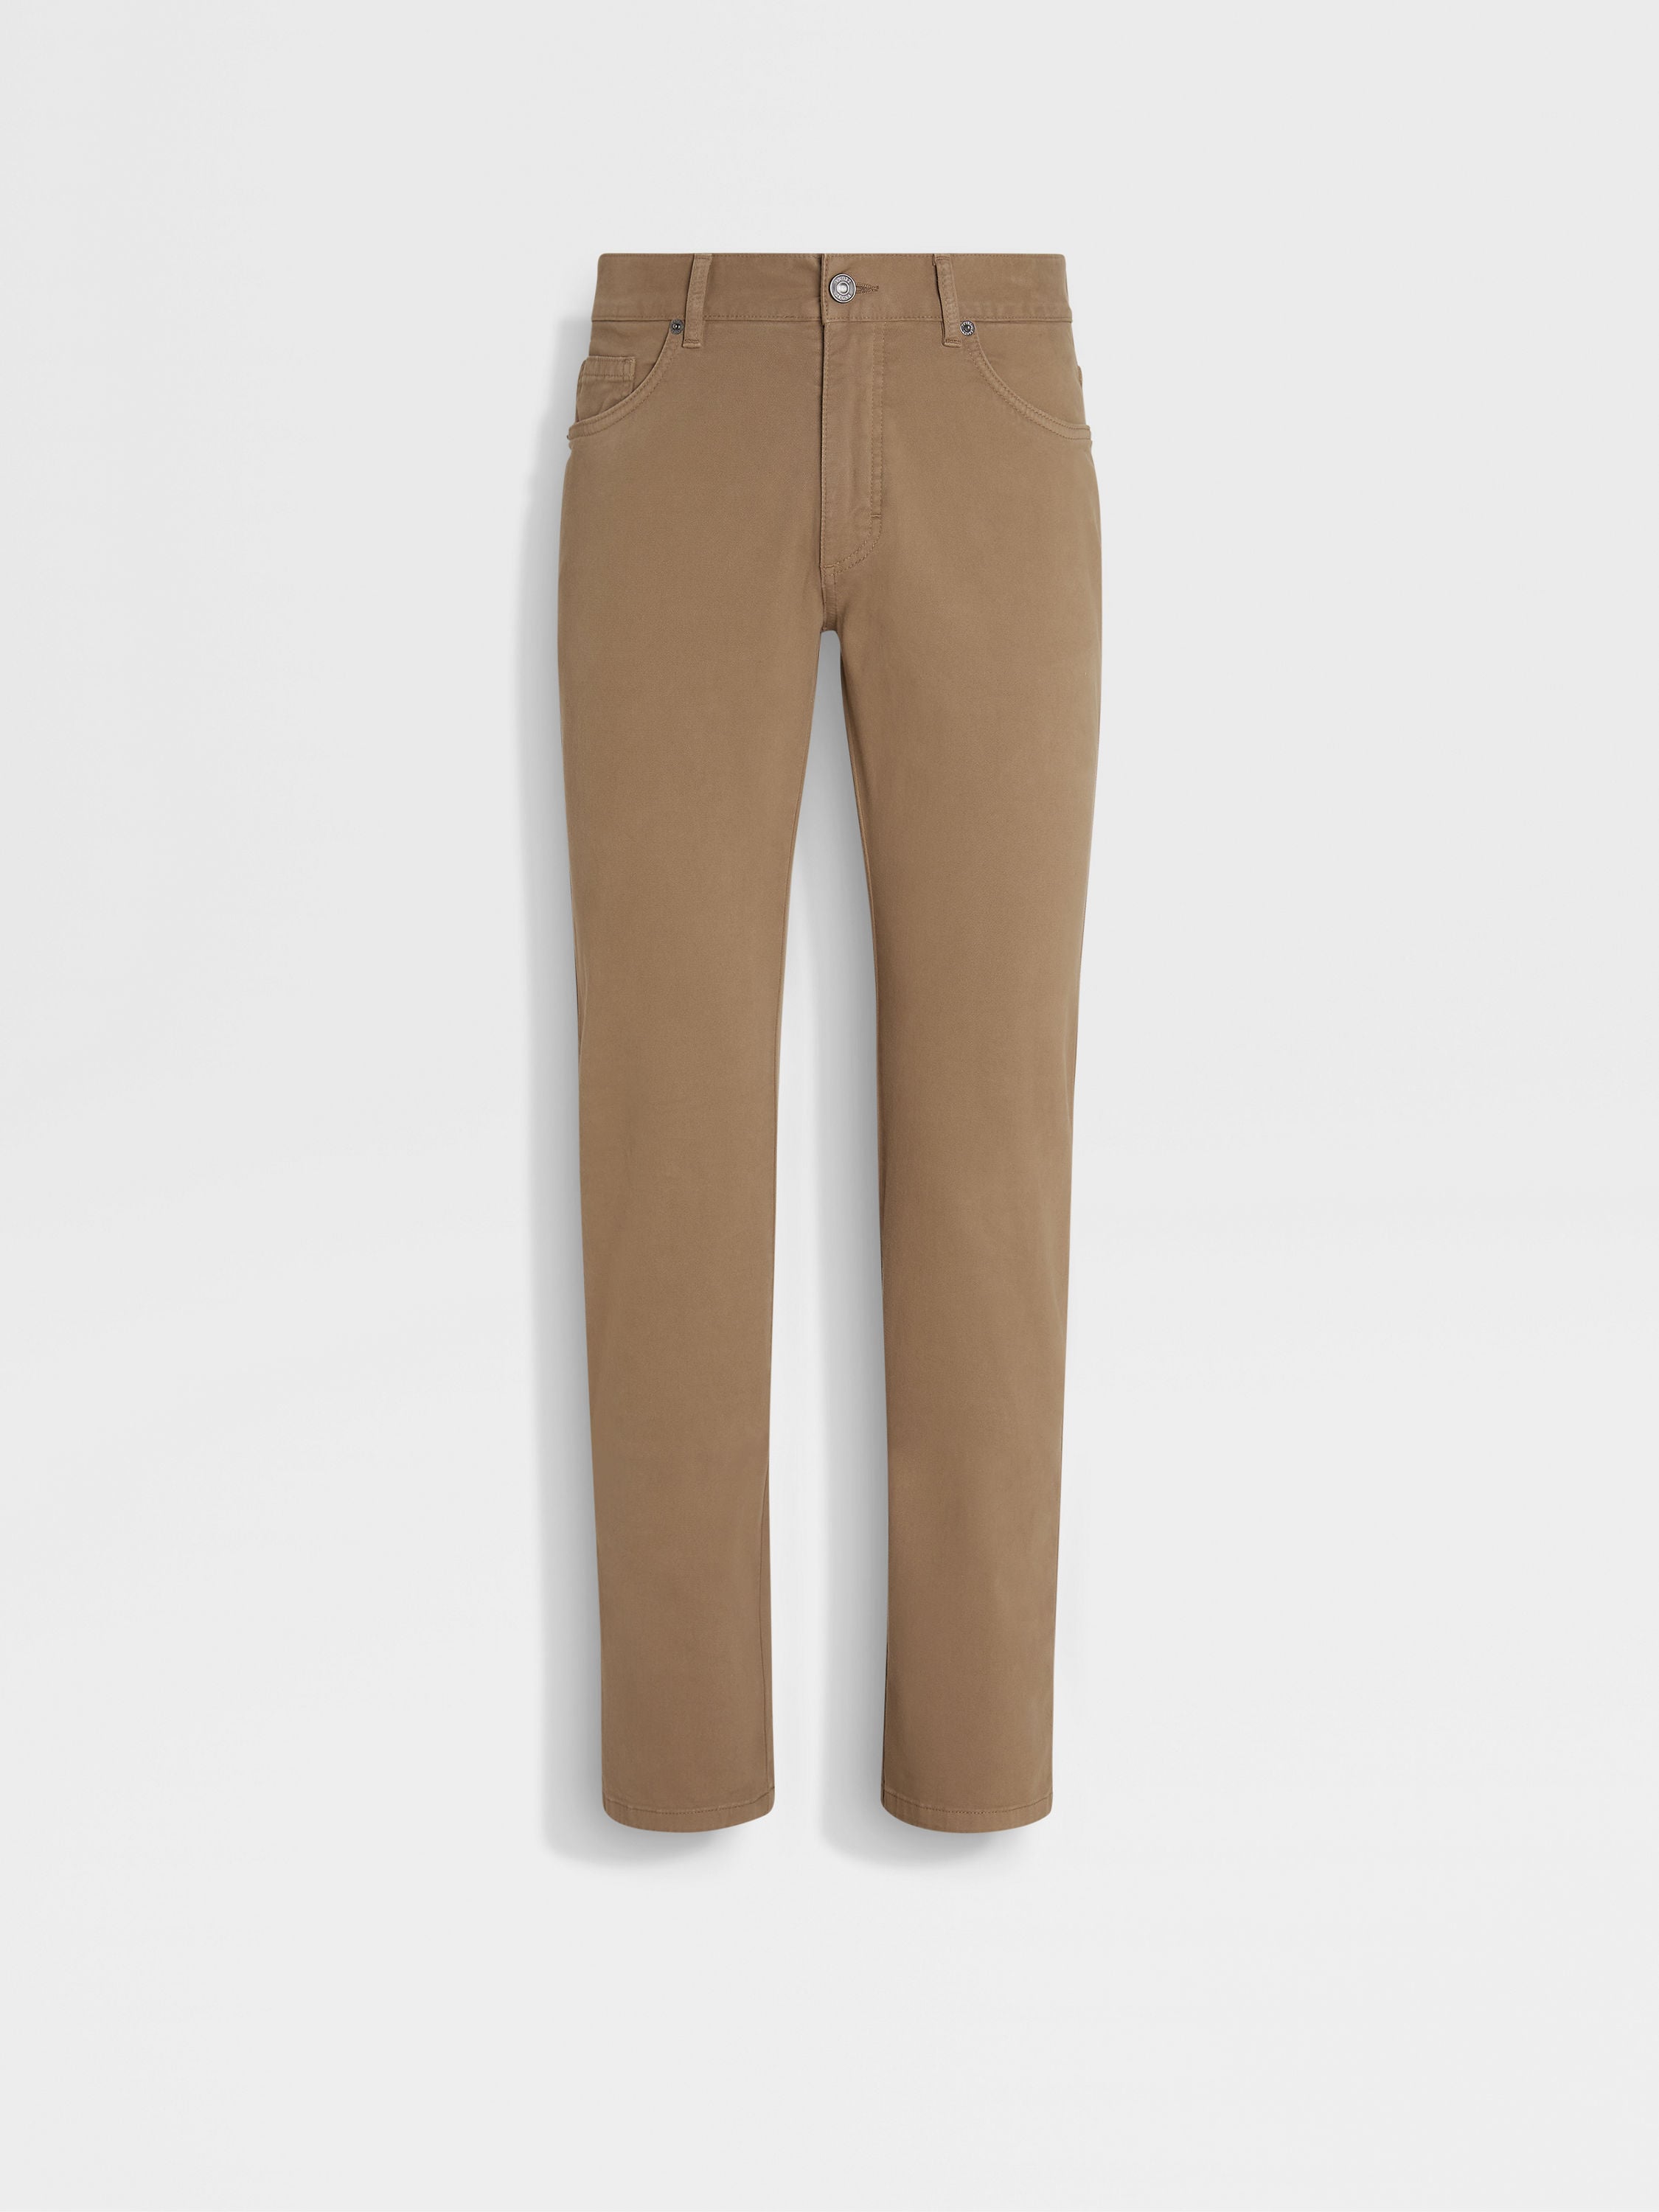 Roccia Collection - Men's 5-pocket Pants and Jeans